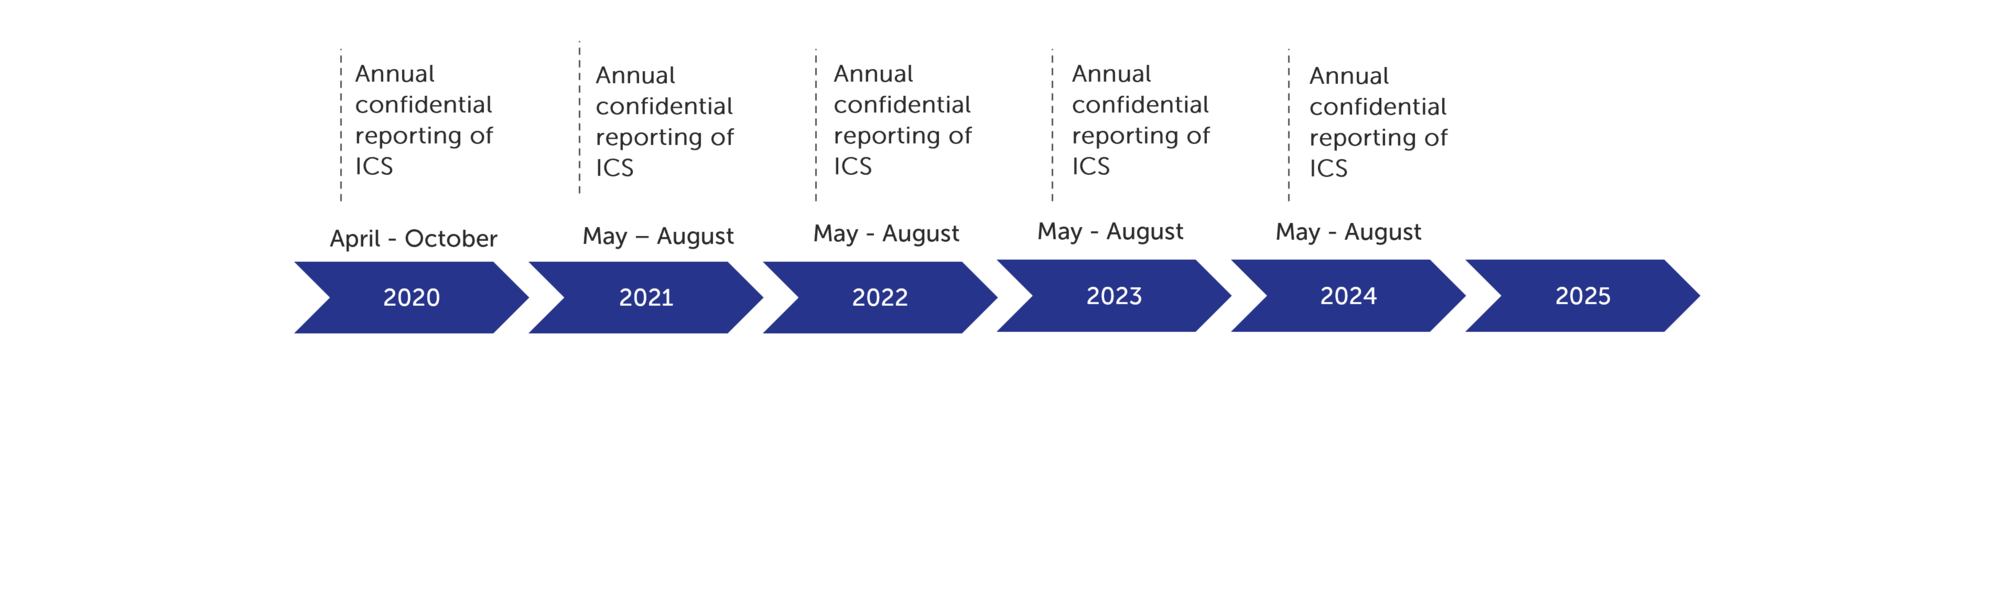 Key milestones in the IAIS’ workplan on the ICS development